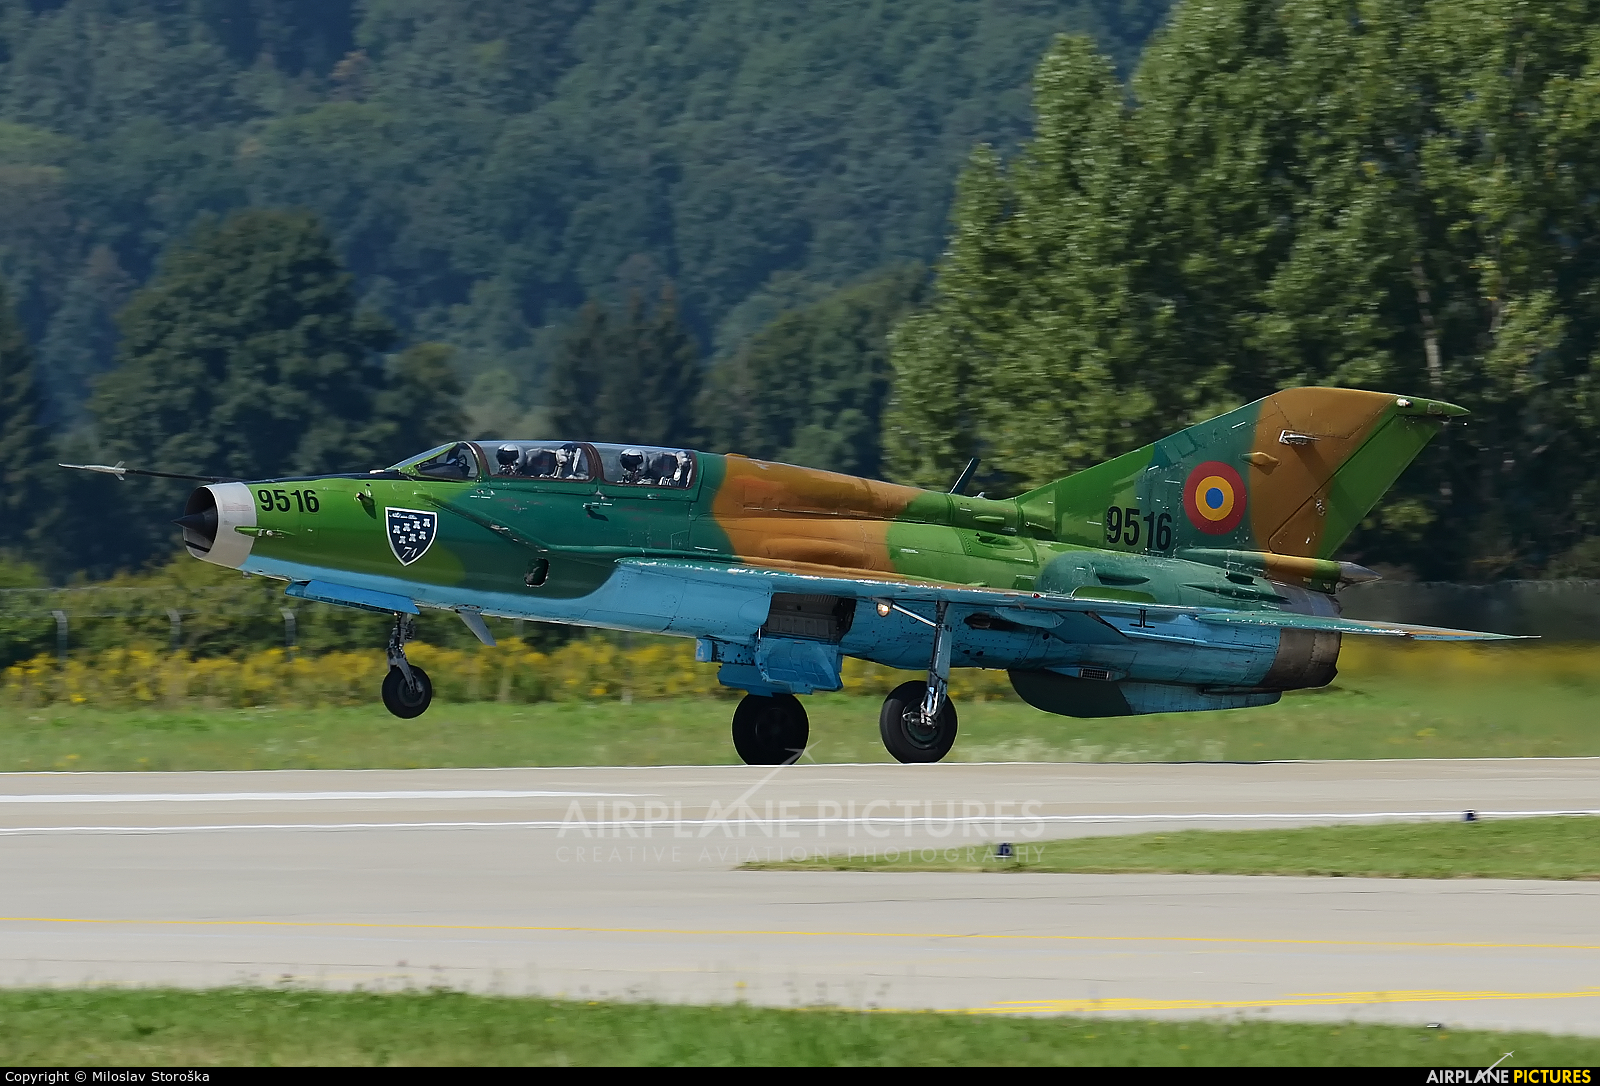 Romania - Air Force 9516 aircraft at Sliač